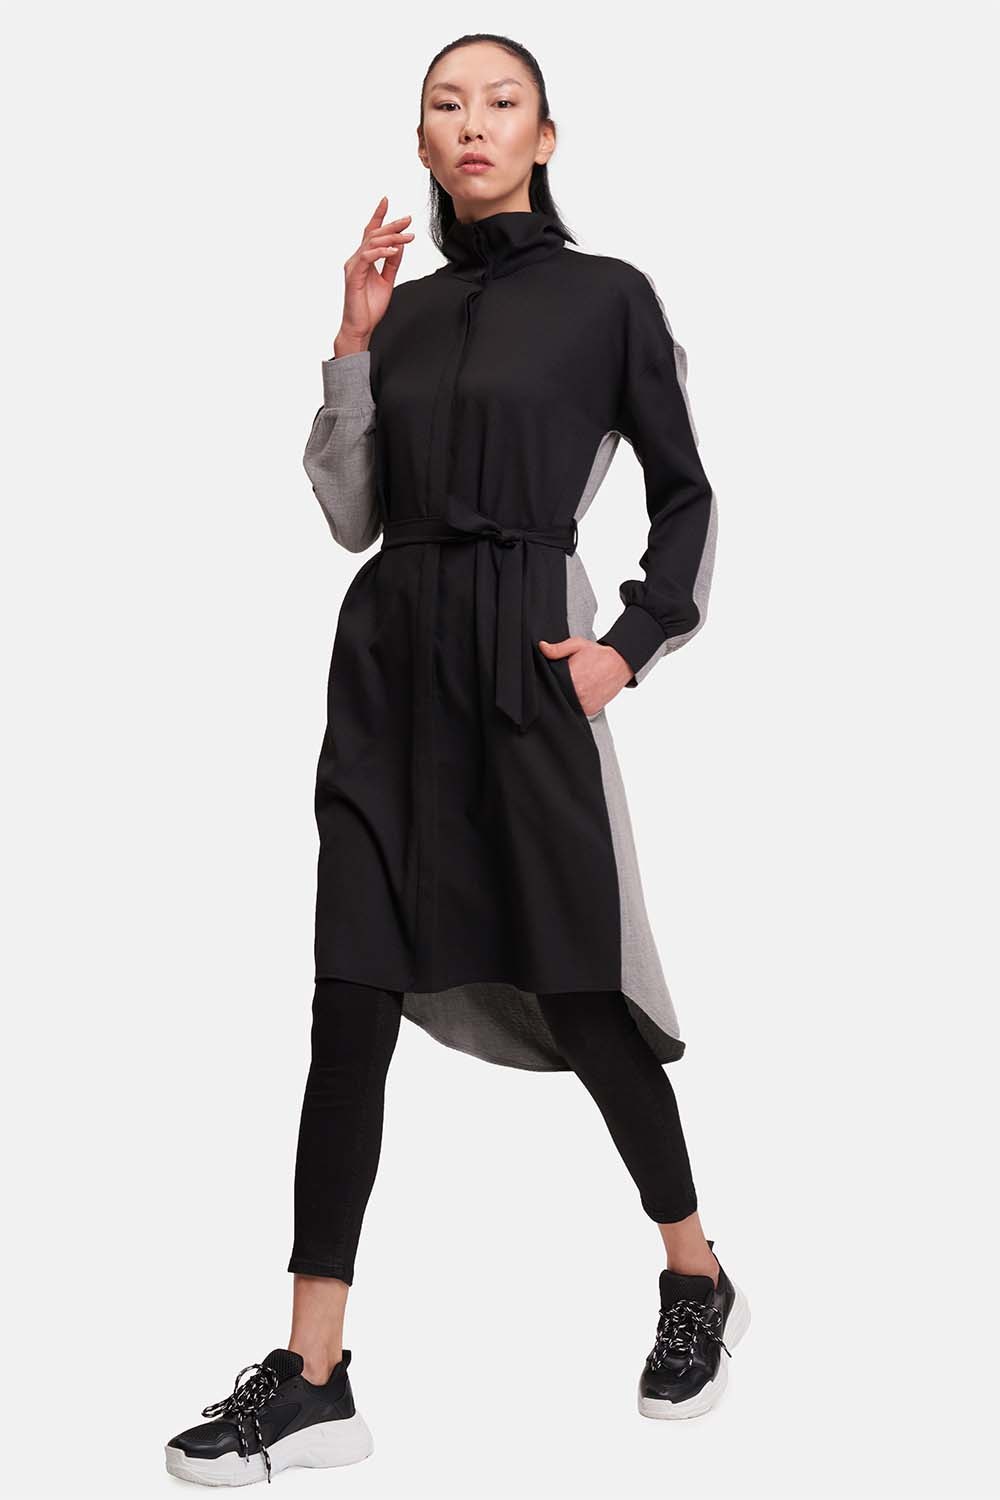 Çift Renkli Tunik Elbise (Gri/Siyah)